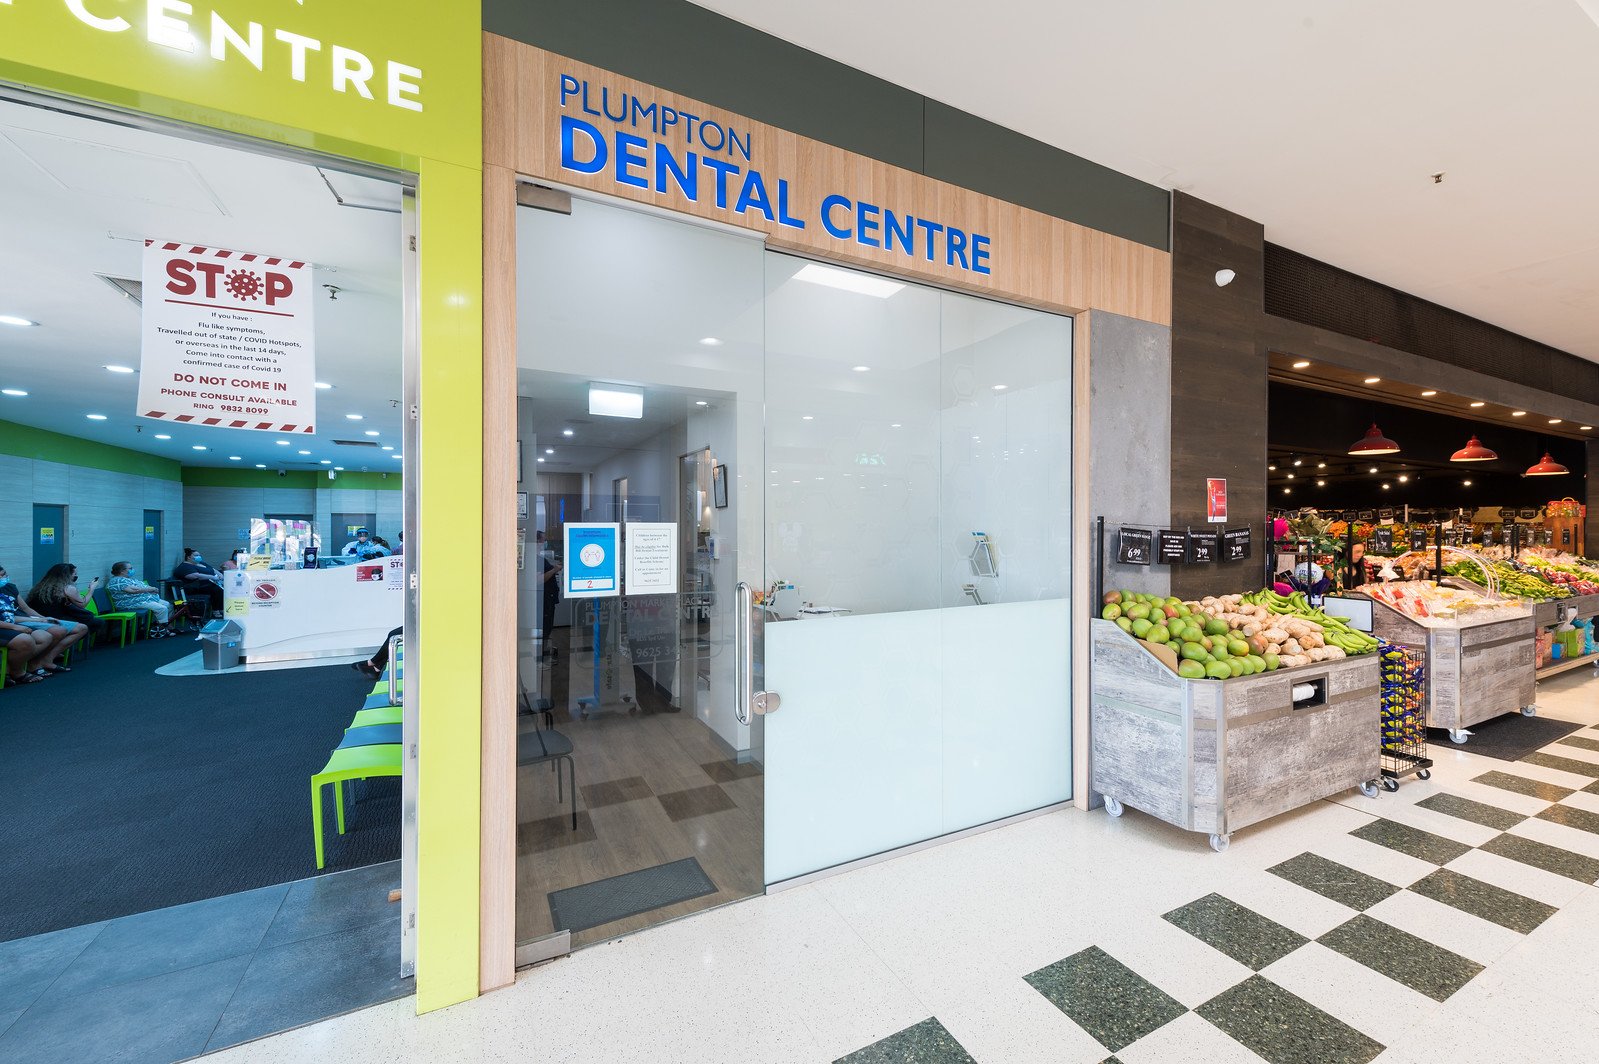 Plumpton Dental Centre External.jpg